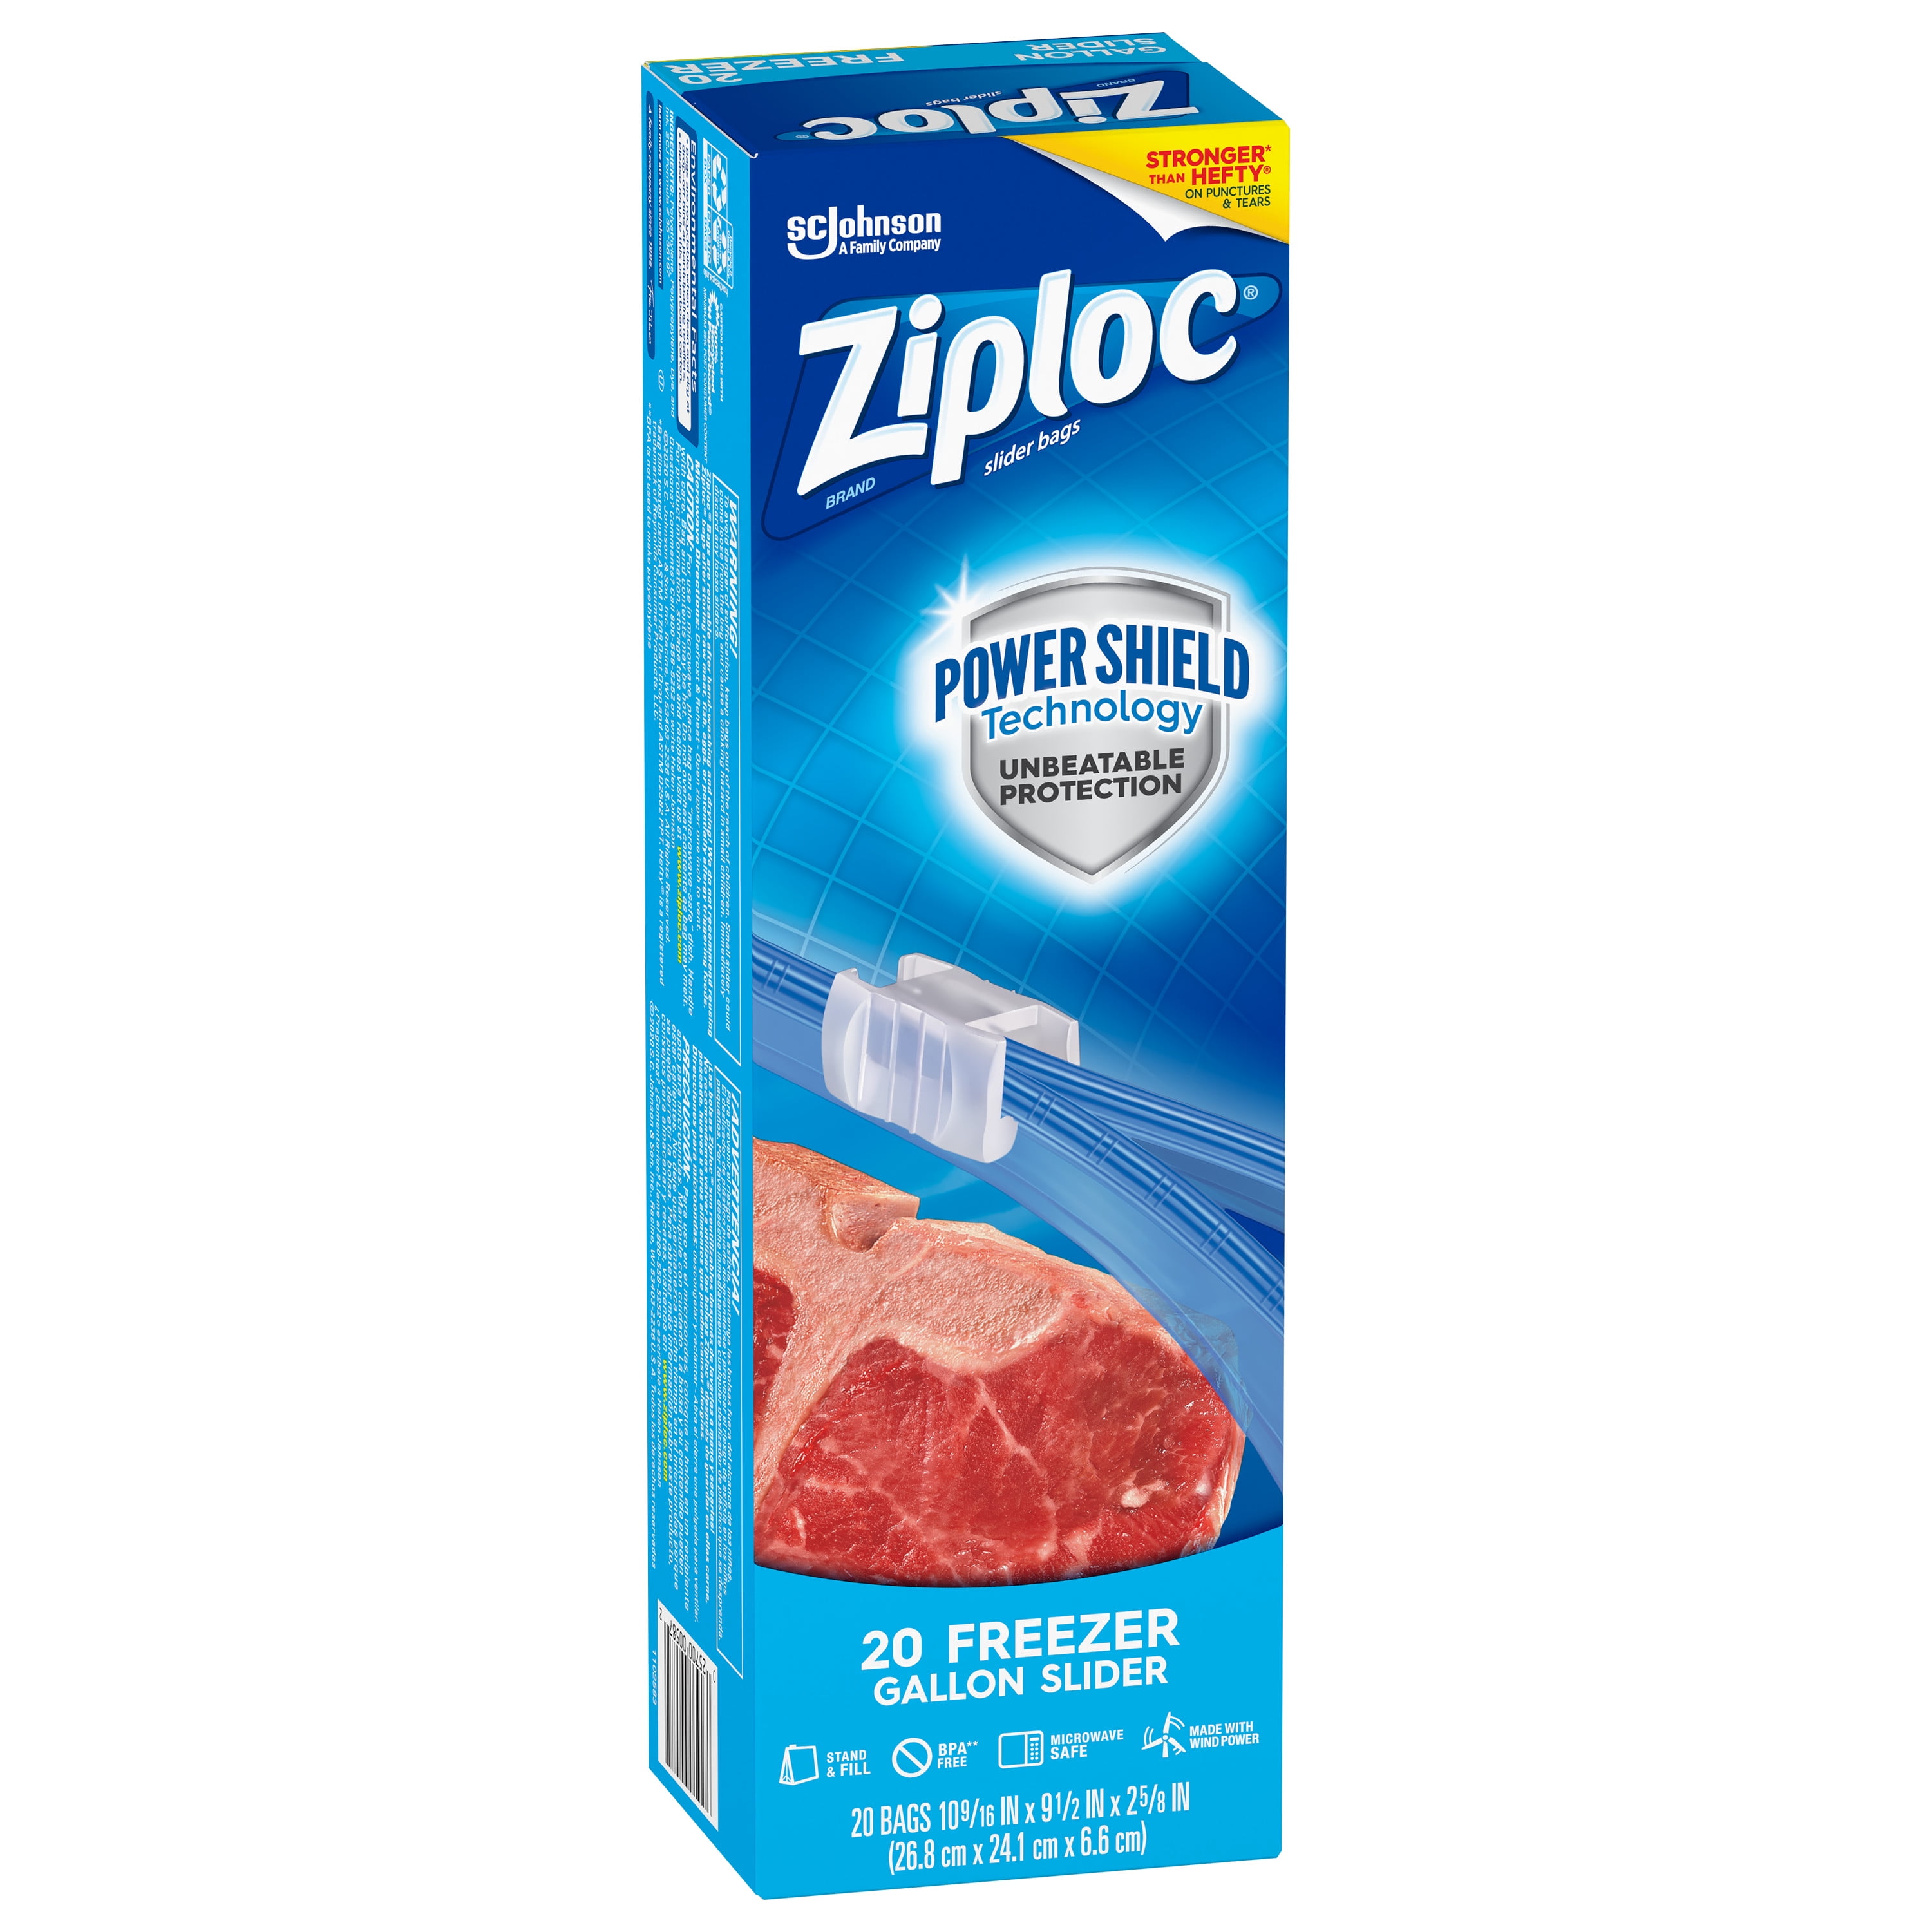 Ziploc® Brand Slider Freezer Bags with Power Shield Technology, Gallon, 20  Count